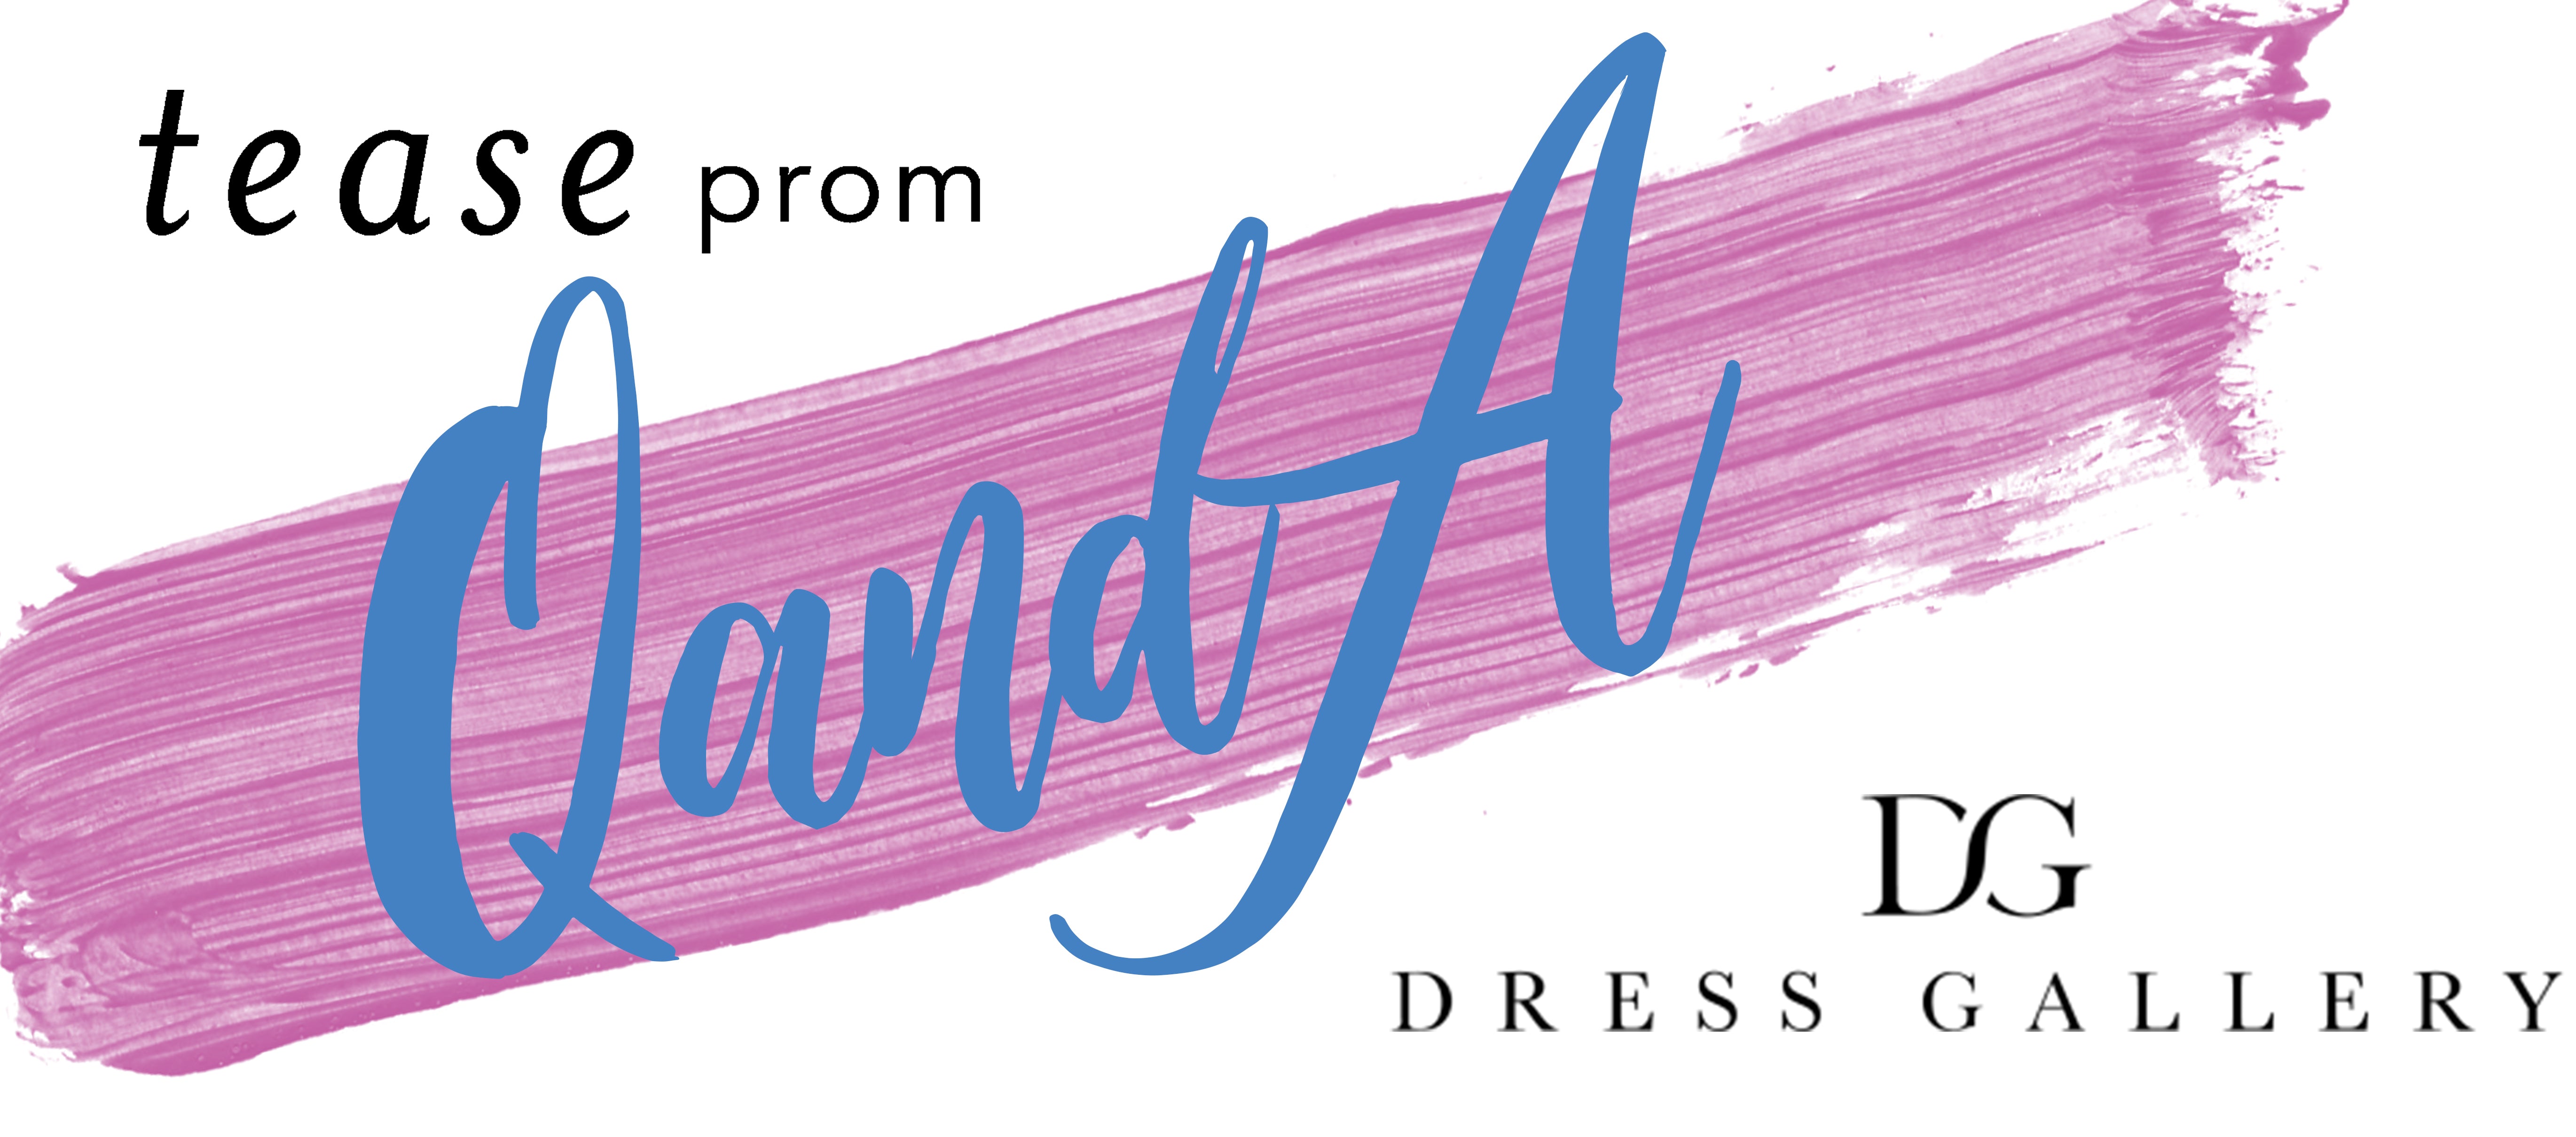 Dress Gallery 2019 Retailer Highlight